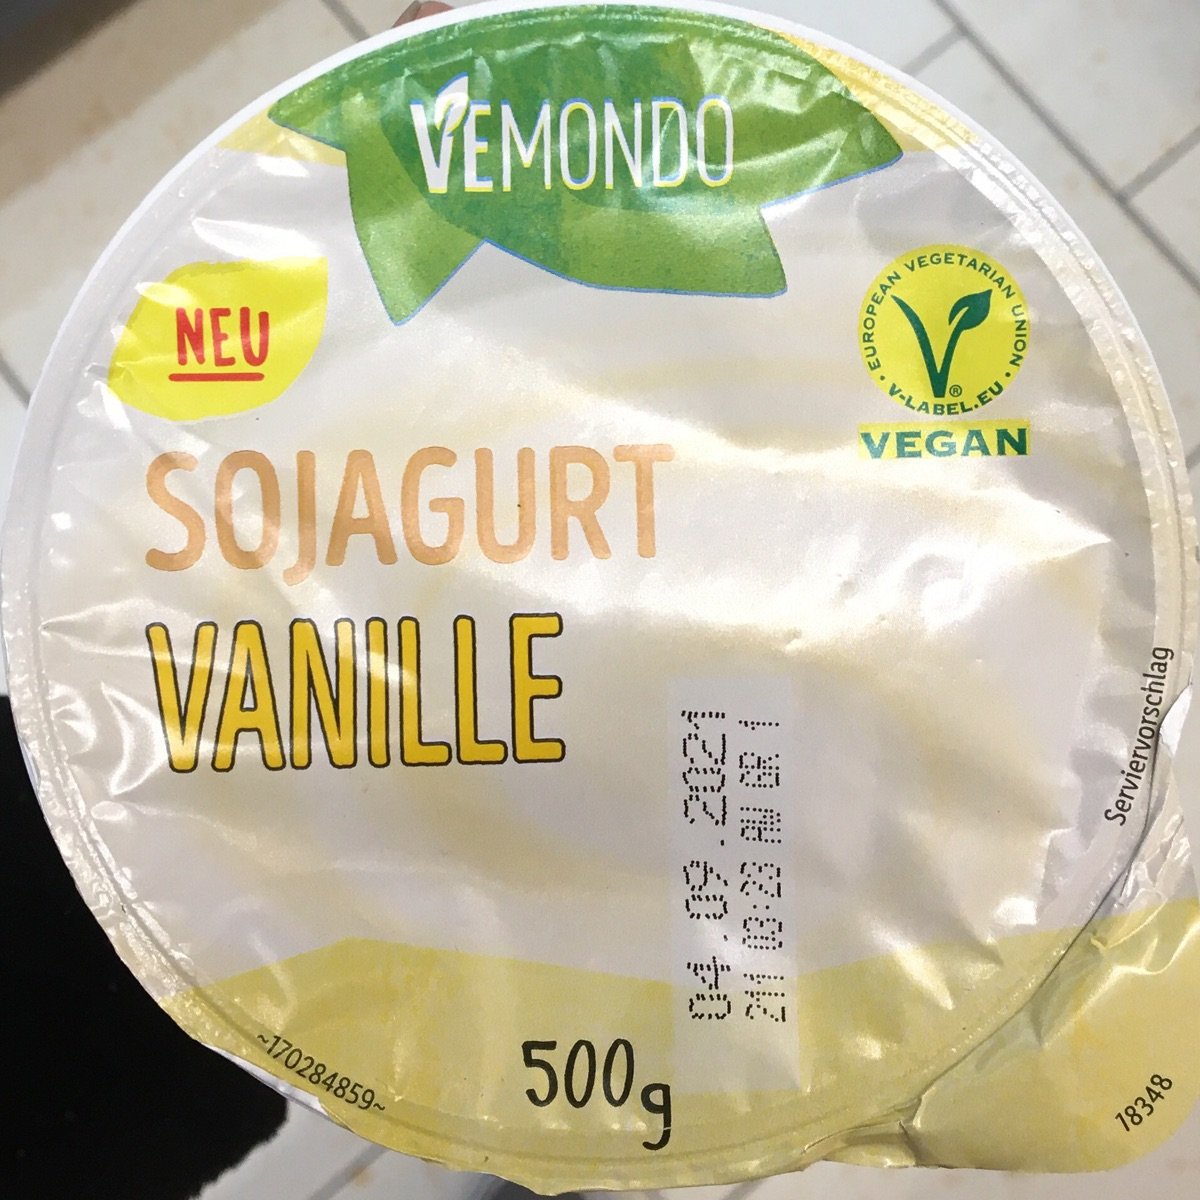 Vanille Vemondo abillion Sojagurt | Review